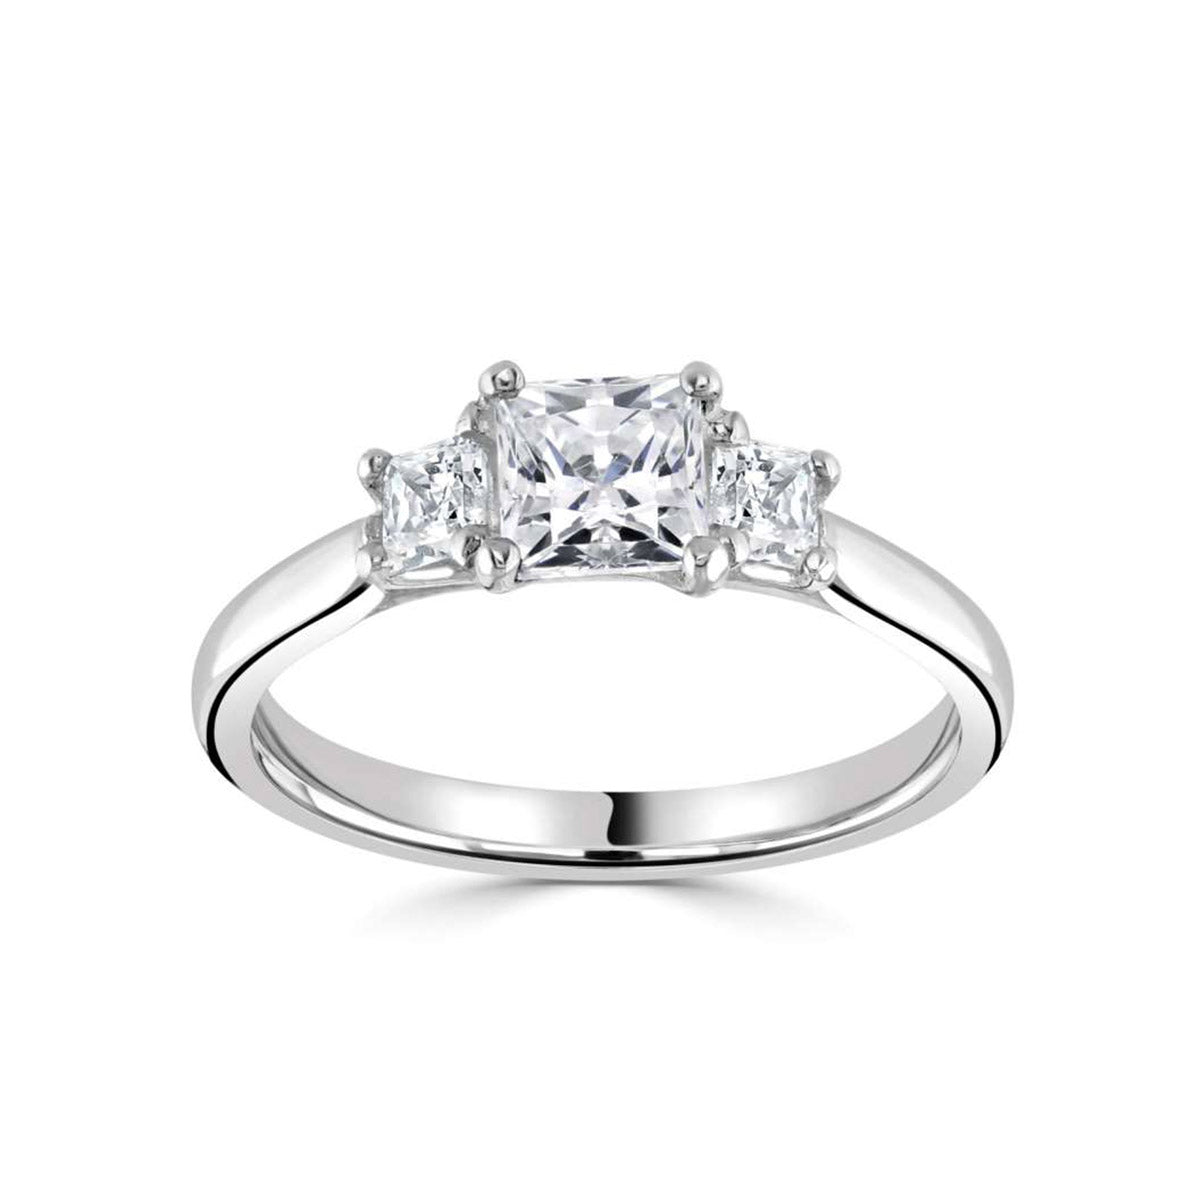 Princess square cut 4 claw trilogy diamond ring